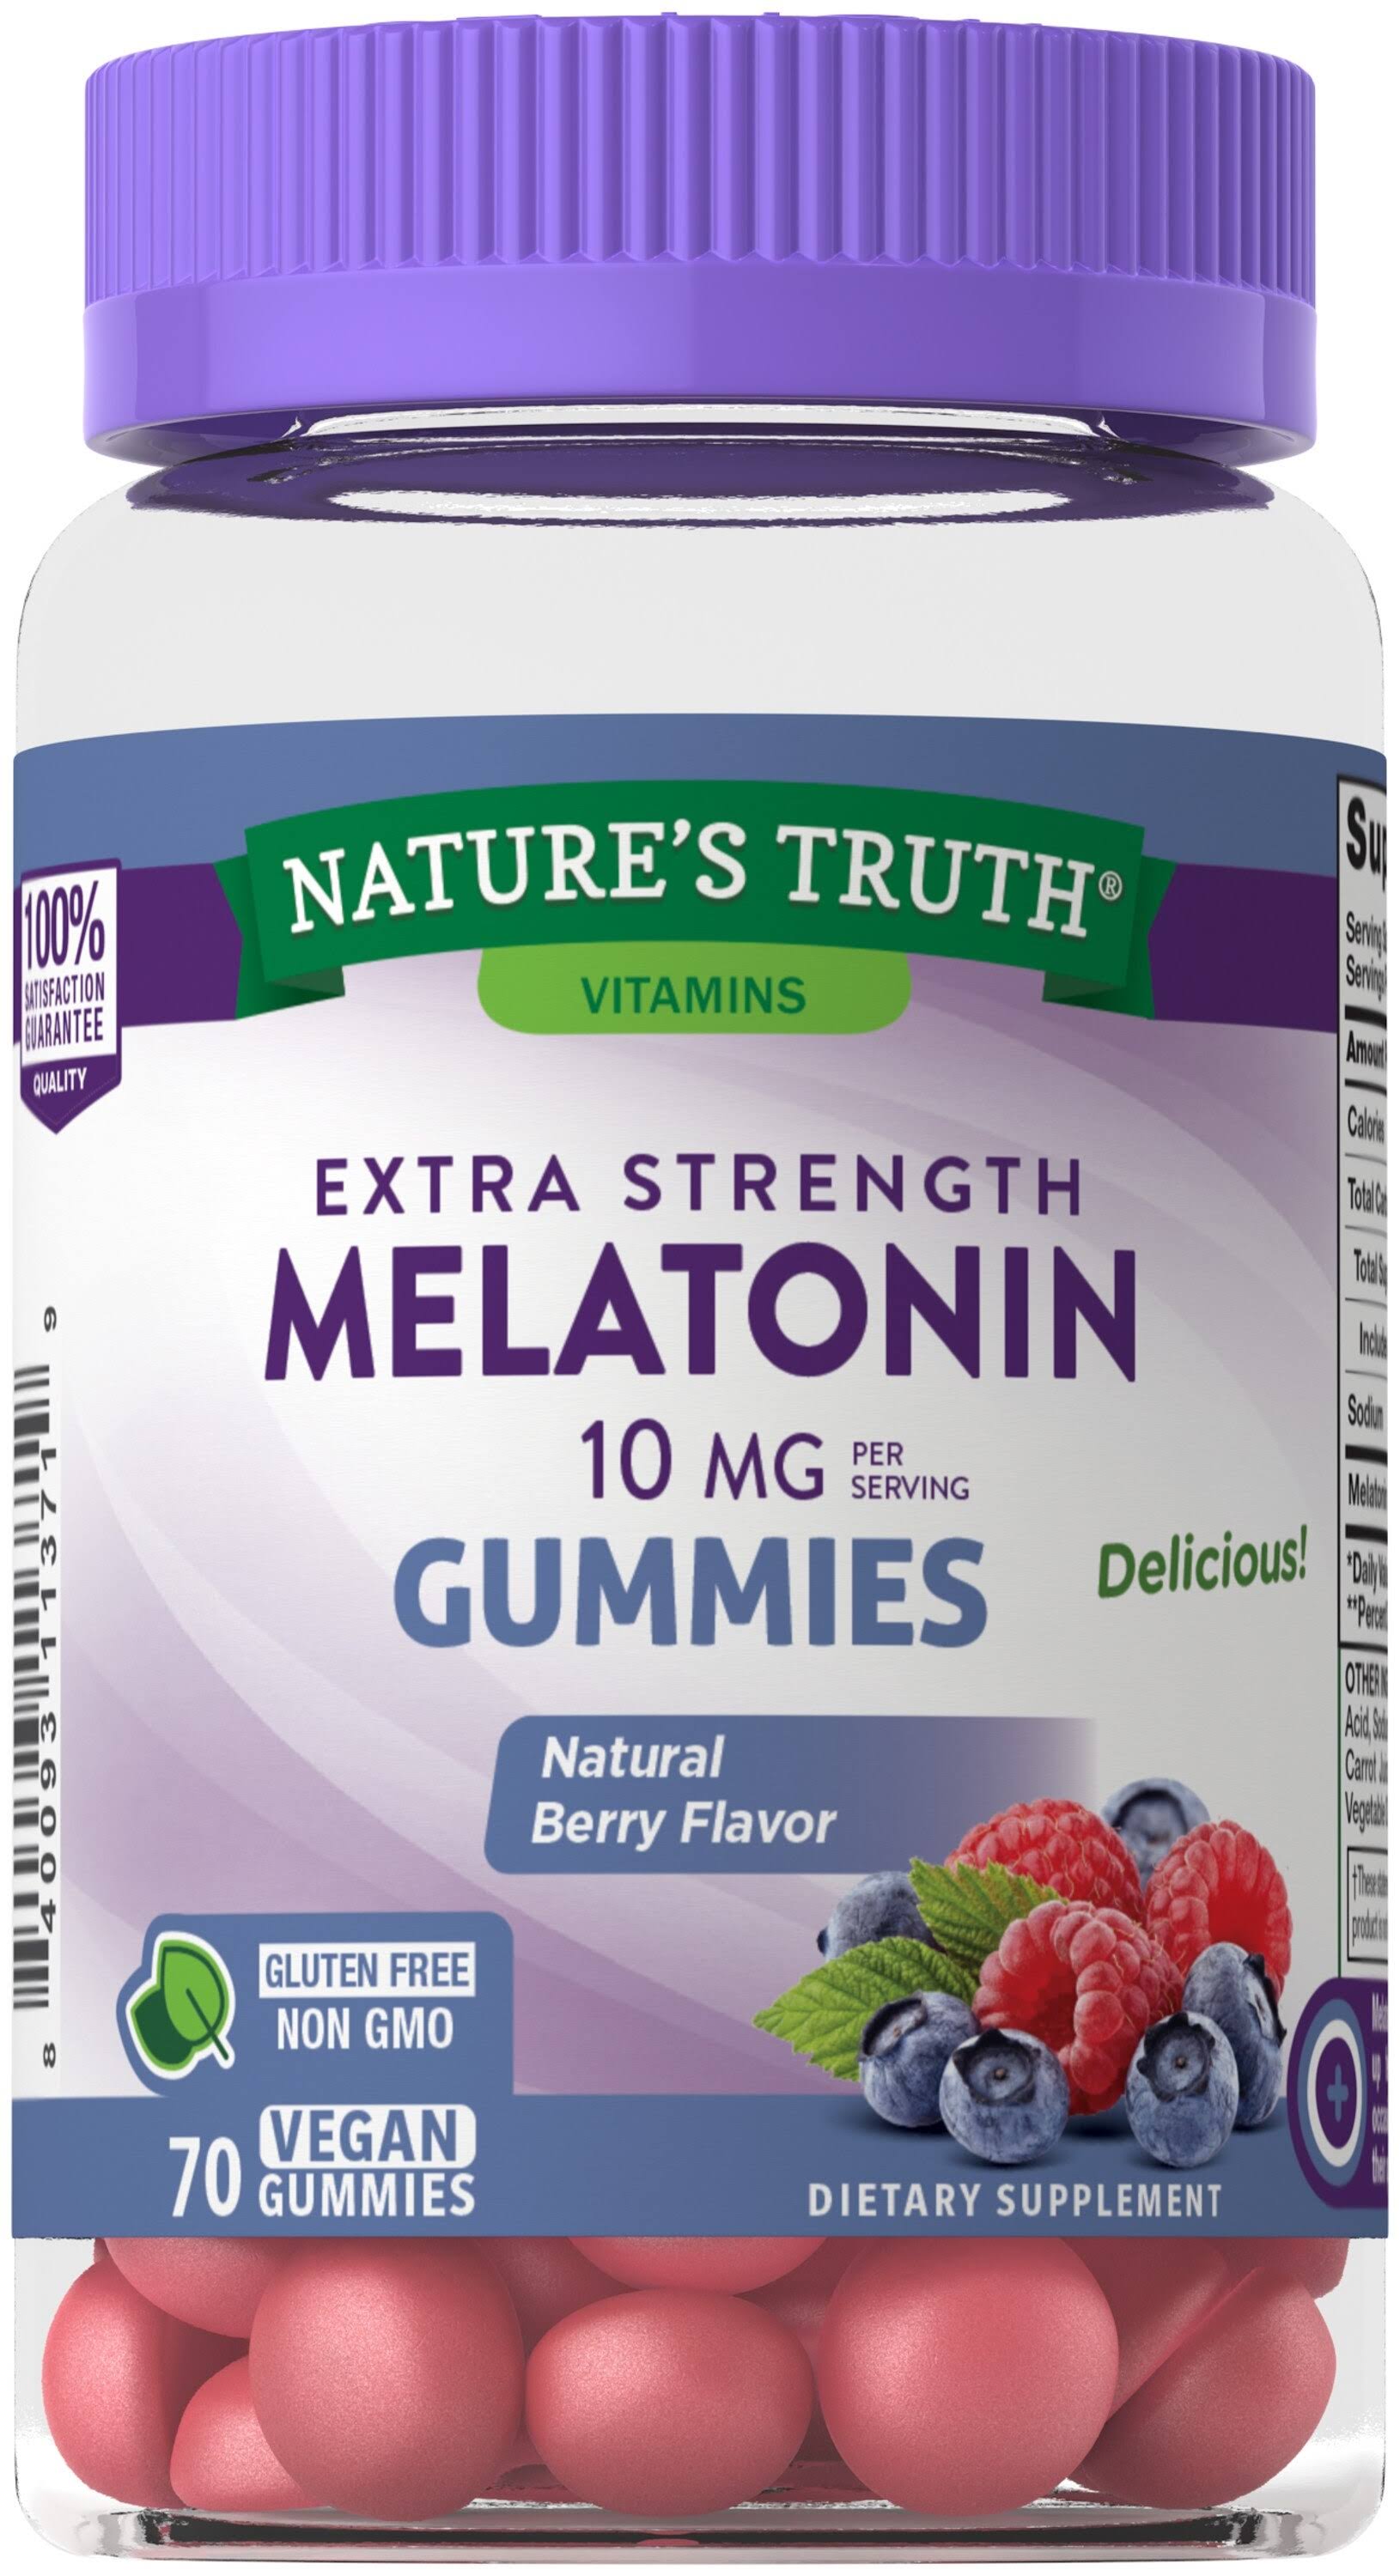 Nature's Truth Melatonin, Extra Strength, 10 mg, Gummies, Natural Berry Flavor - 70 gummies